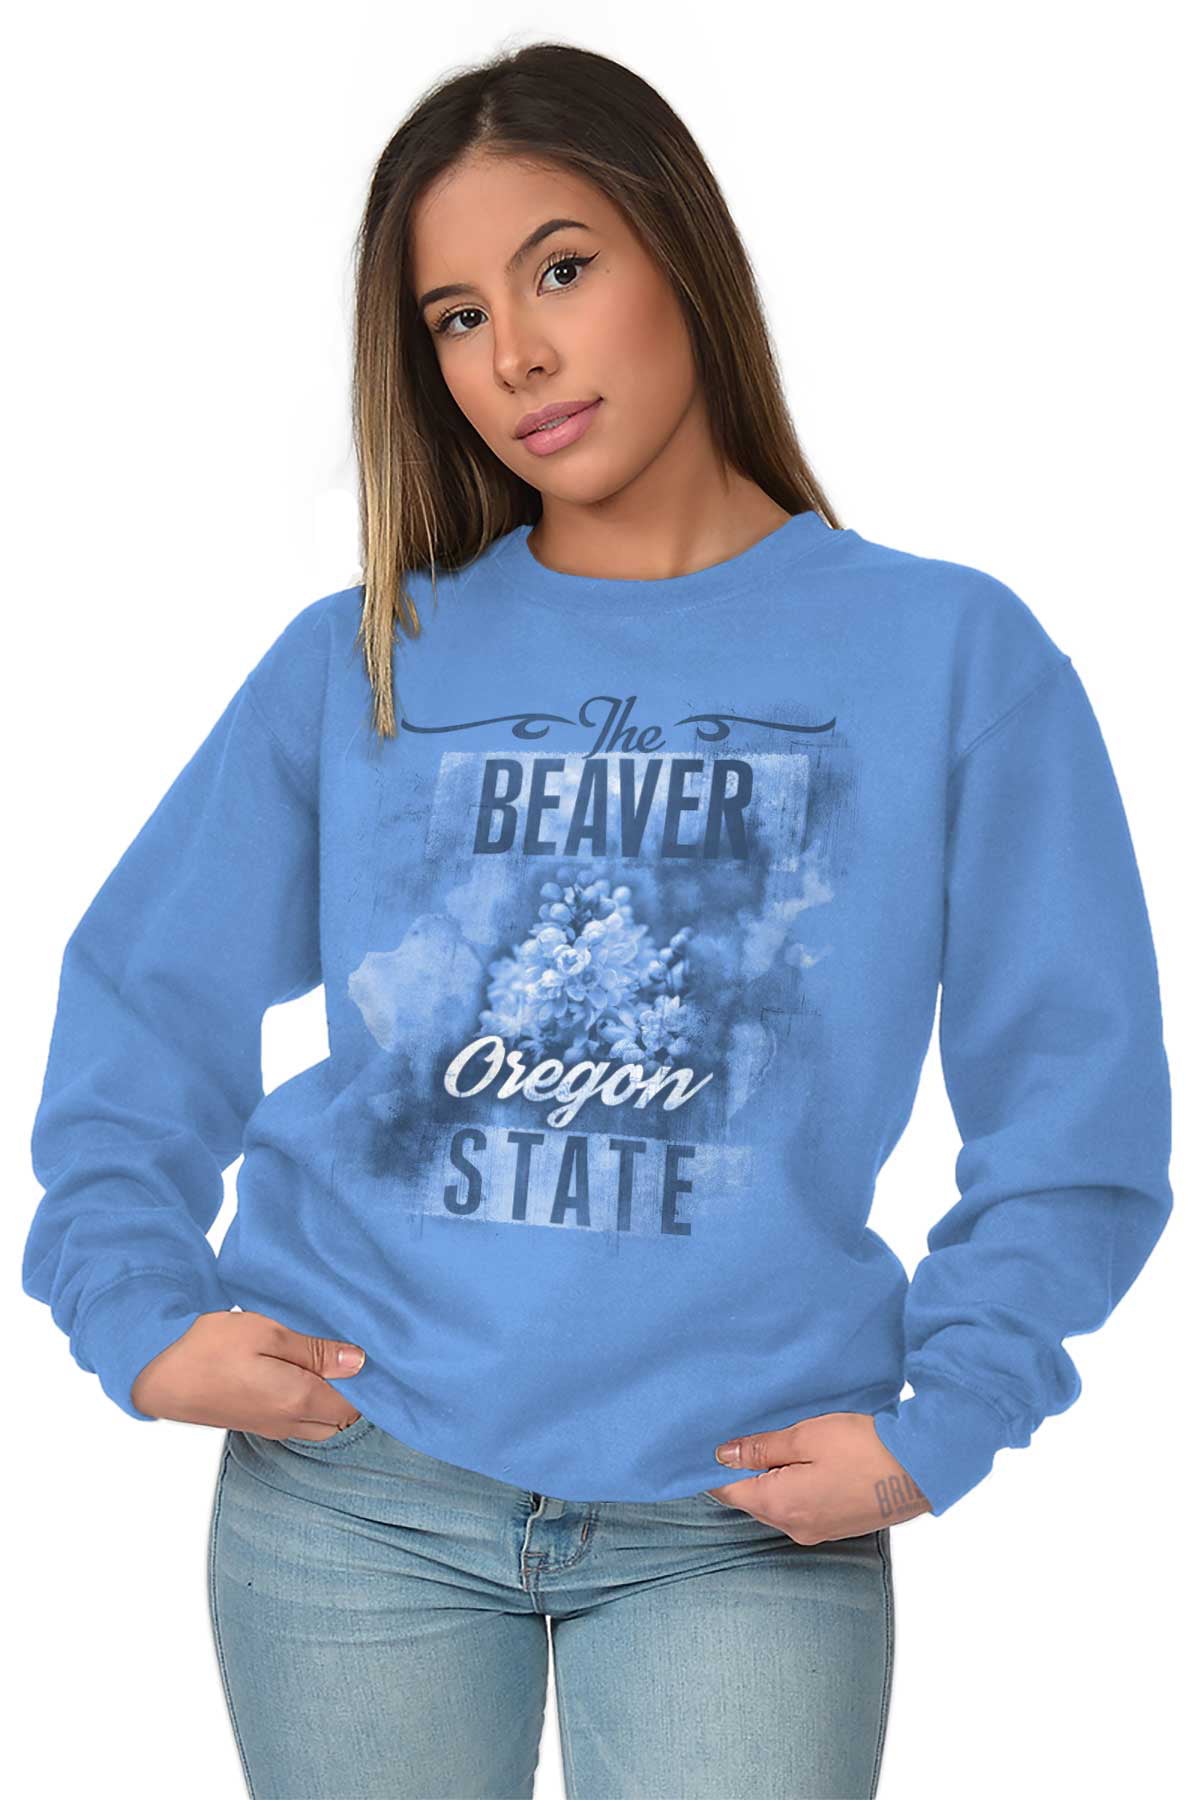 Cute Sweatshirt College Crewneck Oregon Sweatshirt Oversized Sweatshirt Oregon State Oregon Vintage Sweatshirt Trendy Sweatshirt